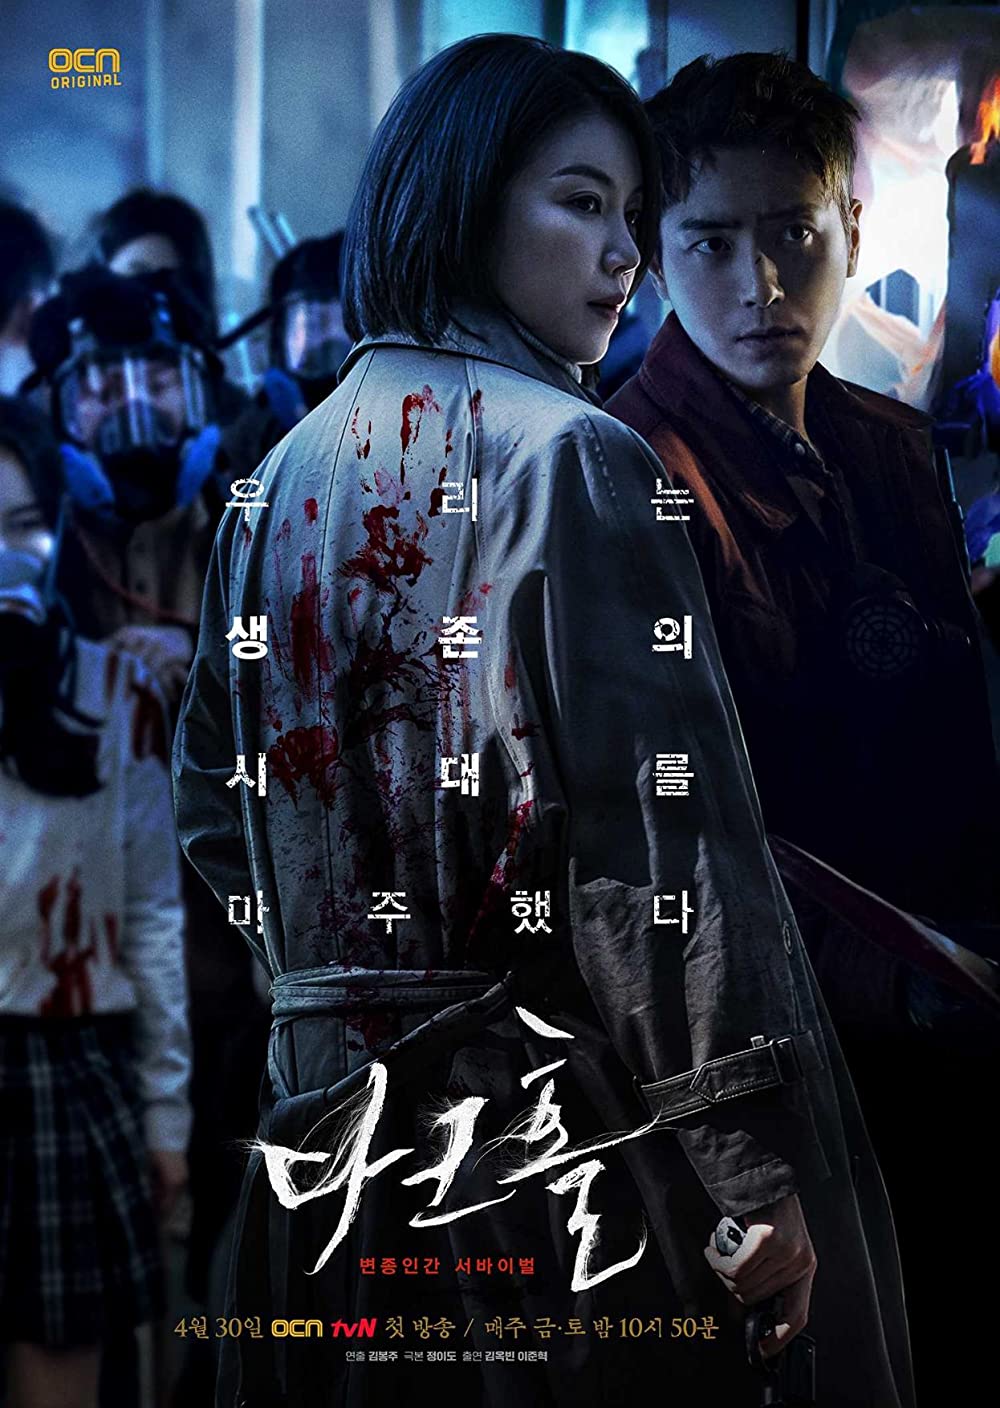 5 Drama Korea thriller wabah penyakit, banyak teka-teki misterius